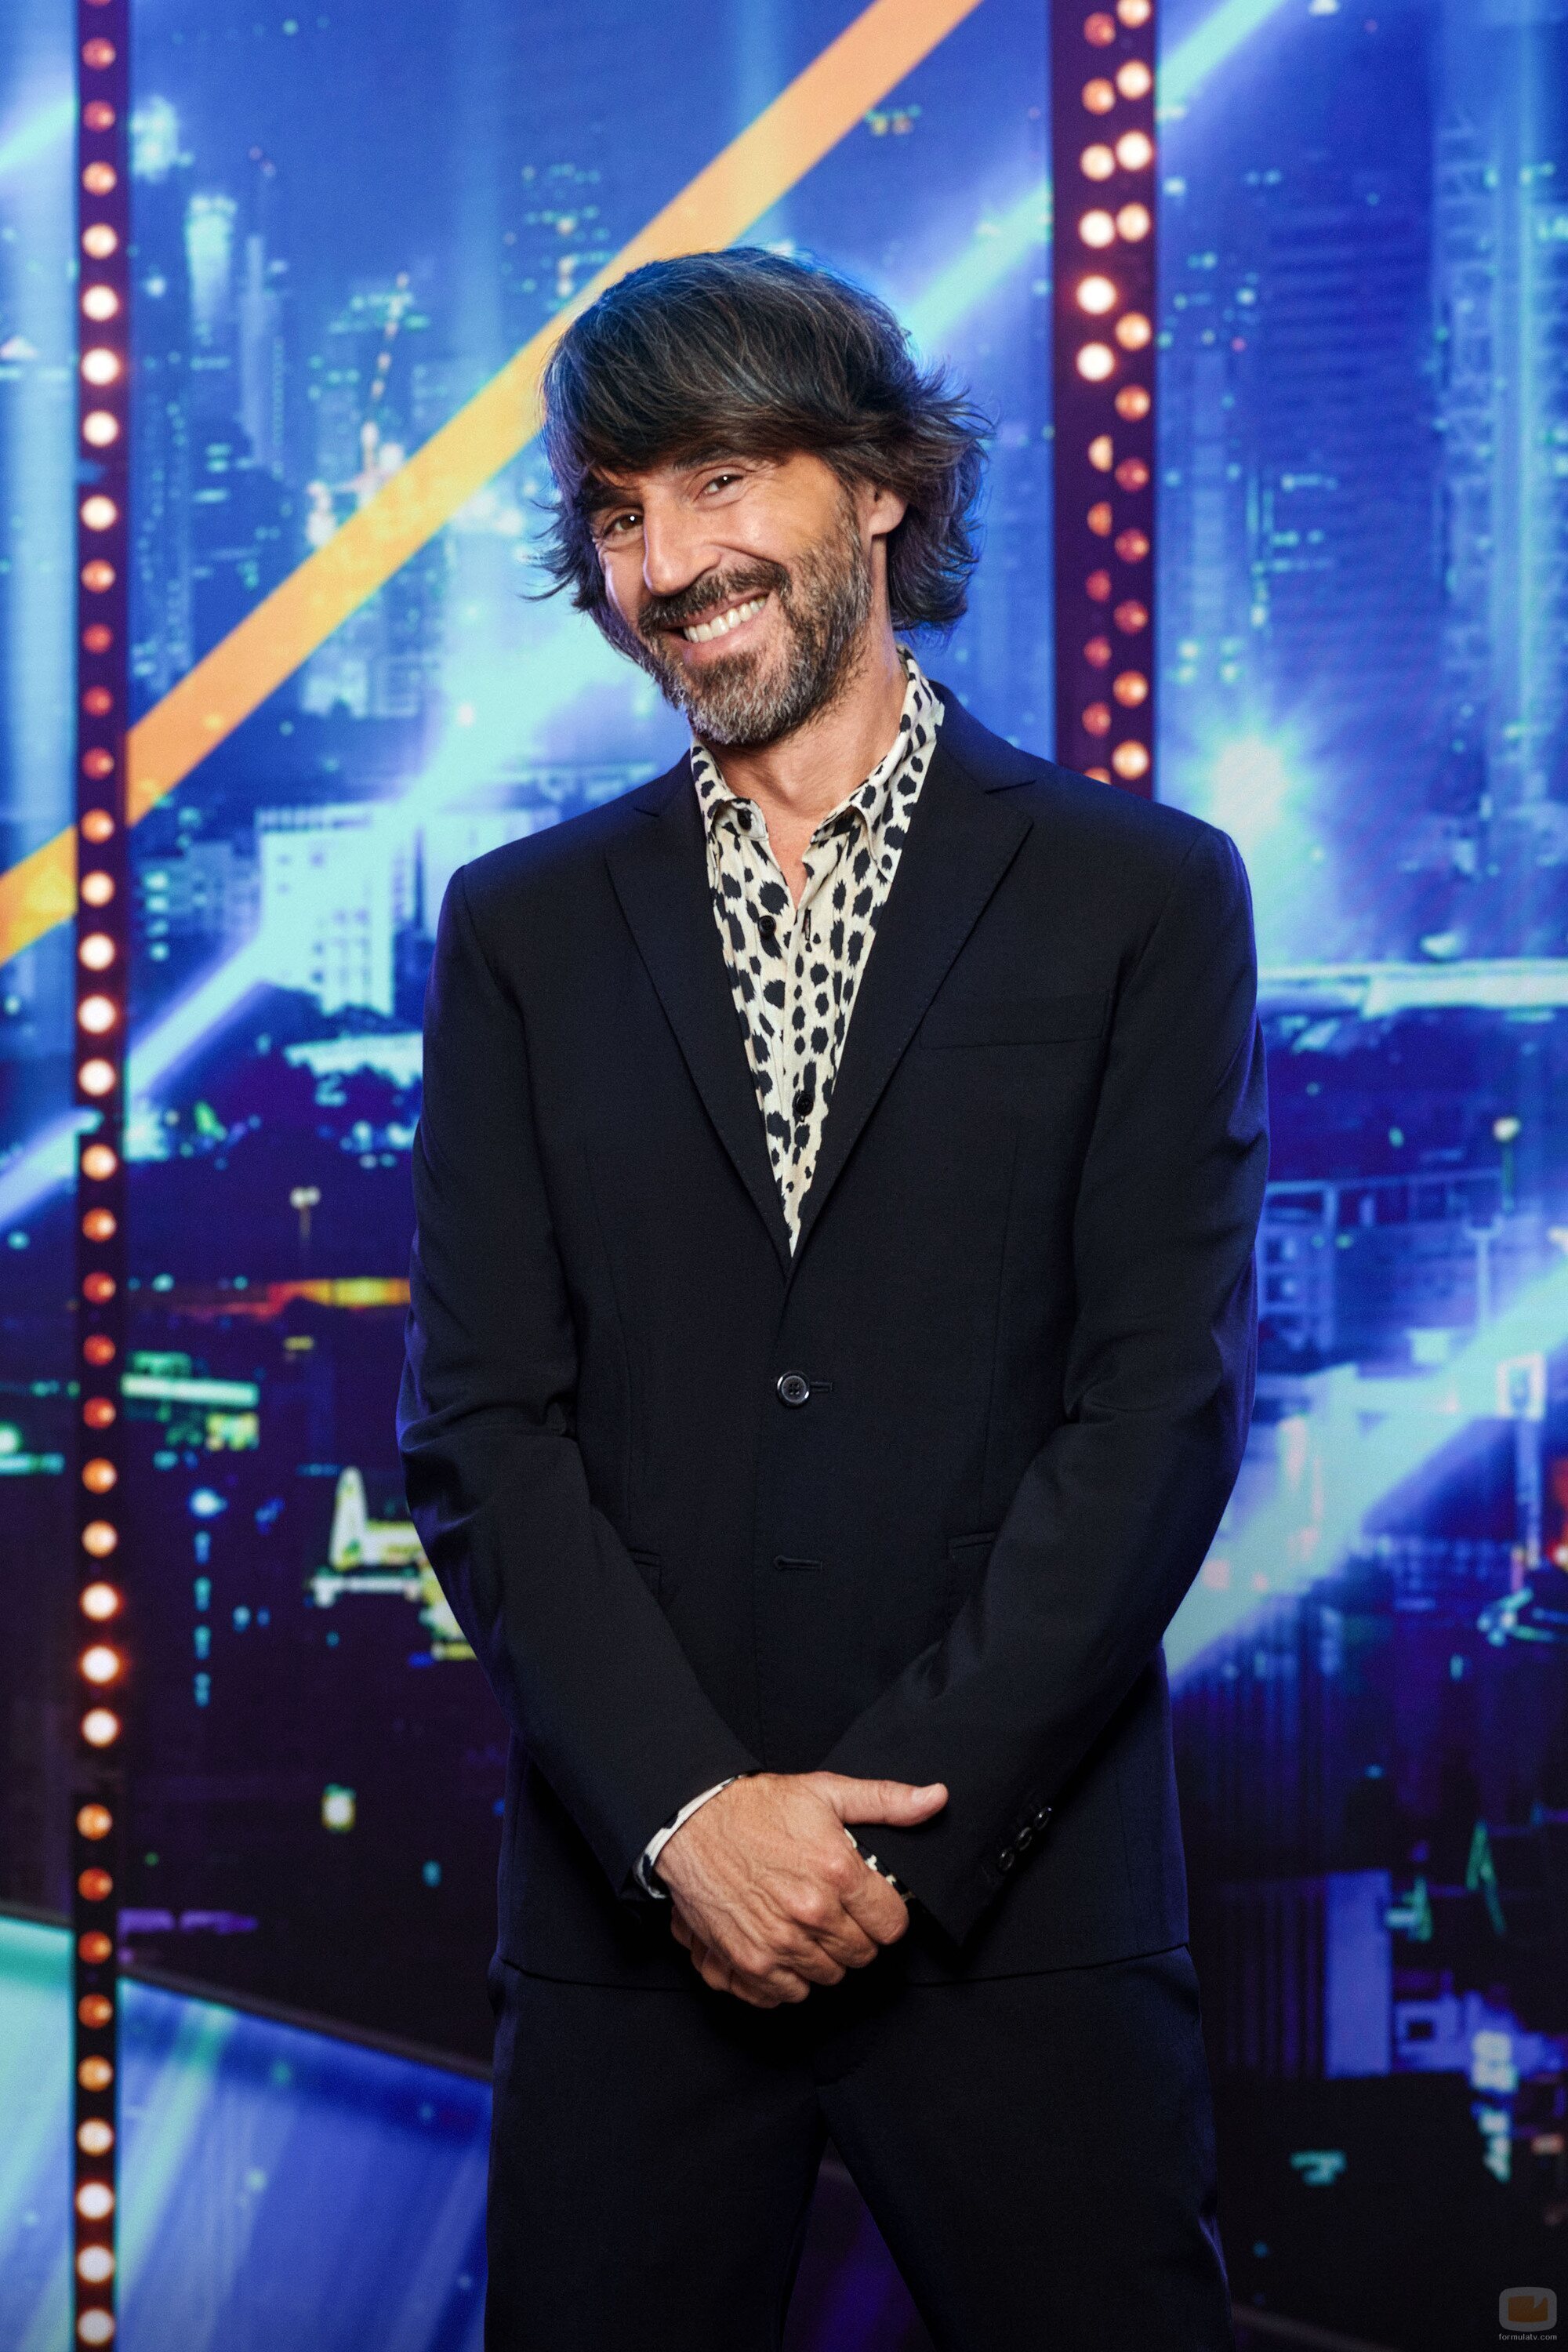 Santi Millán repite como presentador de la octava edición de 'Got Talent España'